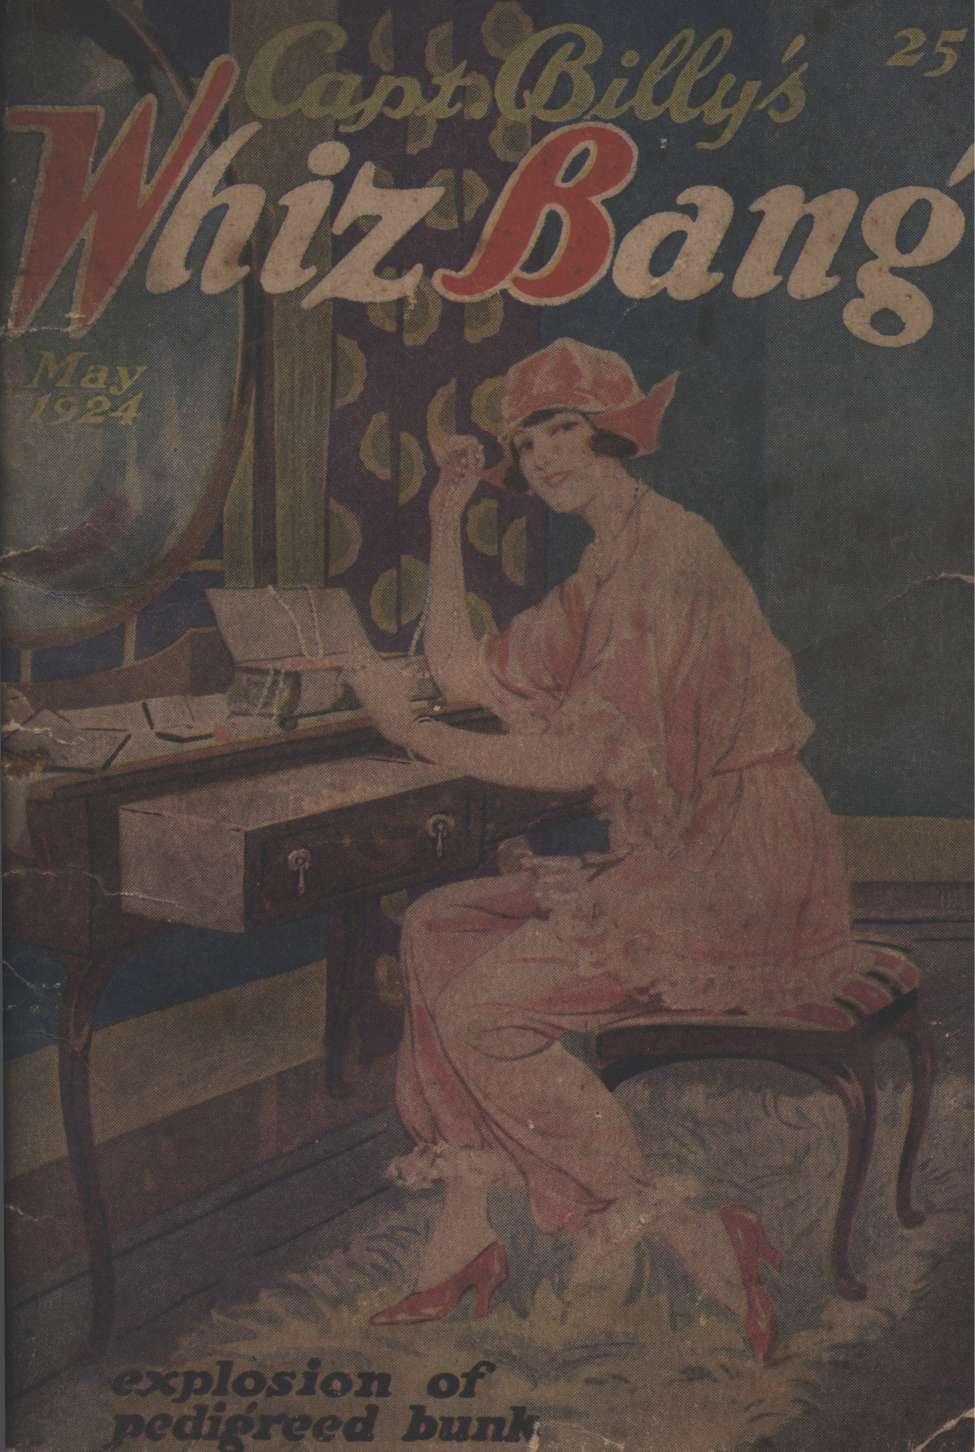 Book Cover For Capt Billy's Whiz Bang v5 59